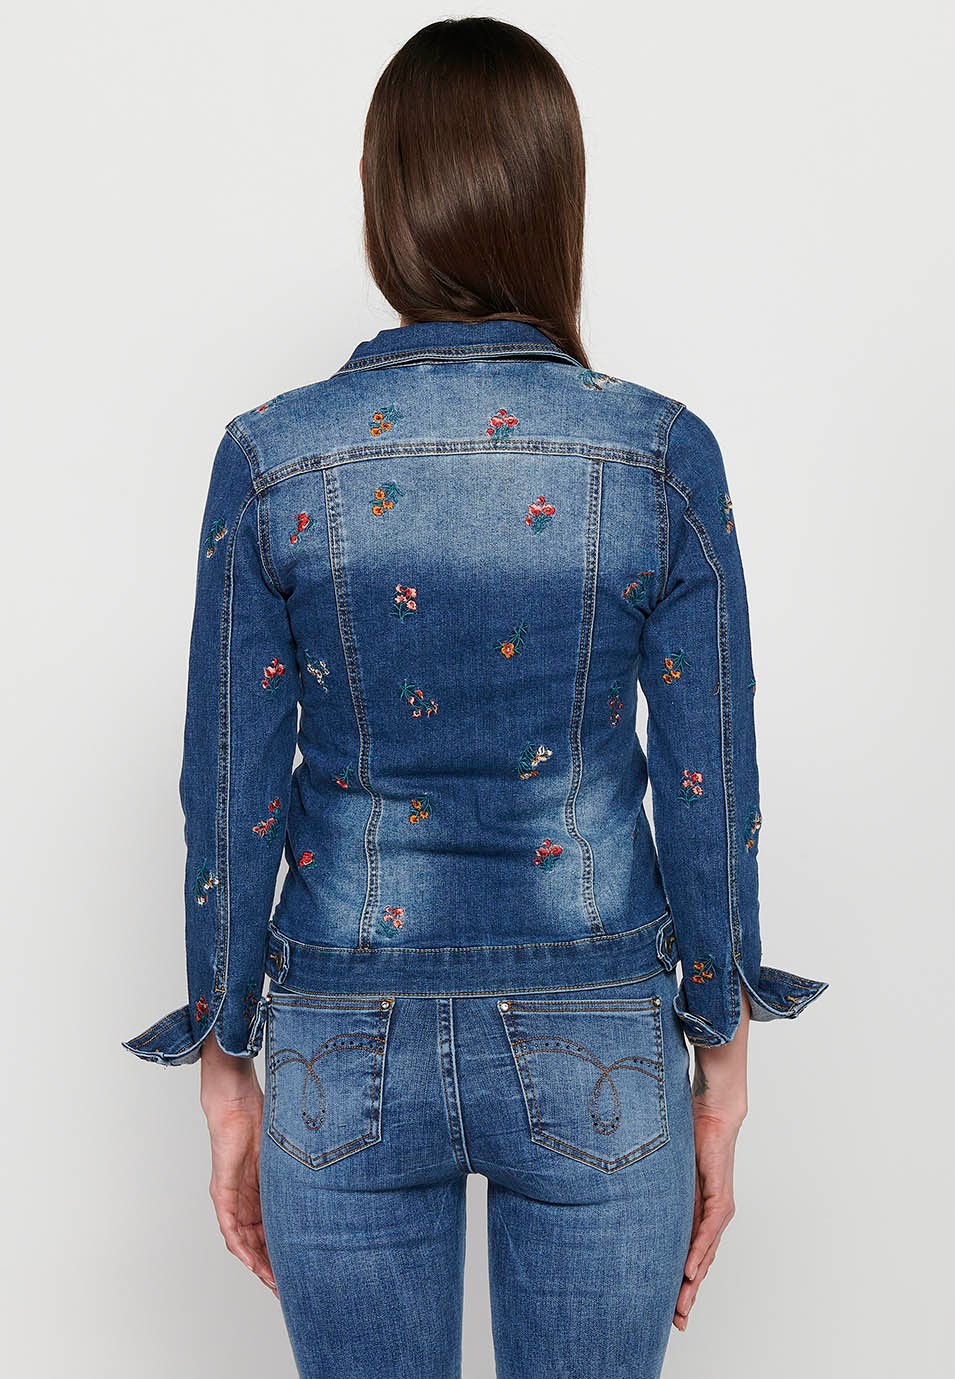 Long sleeve denim jacket, floral embroidery, blue color for women